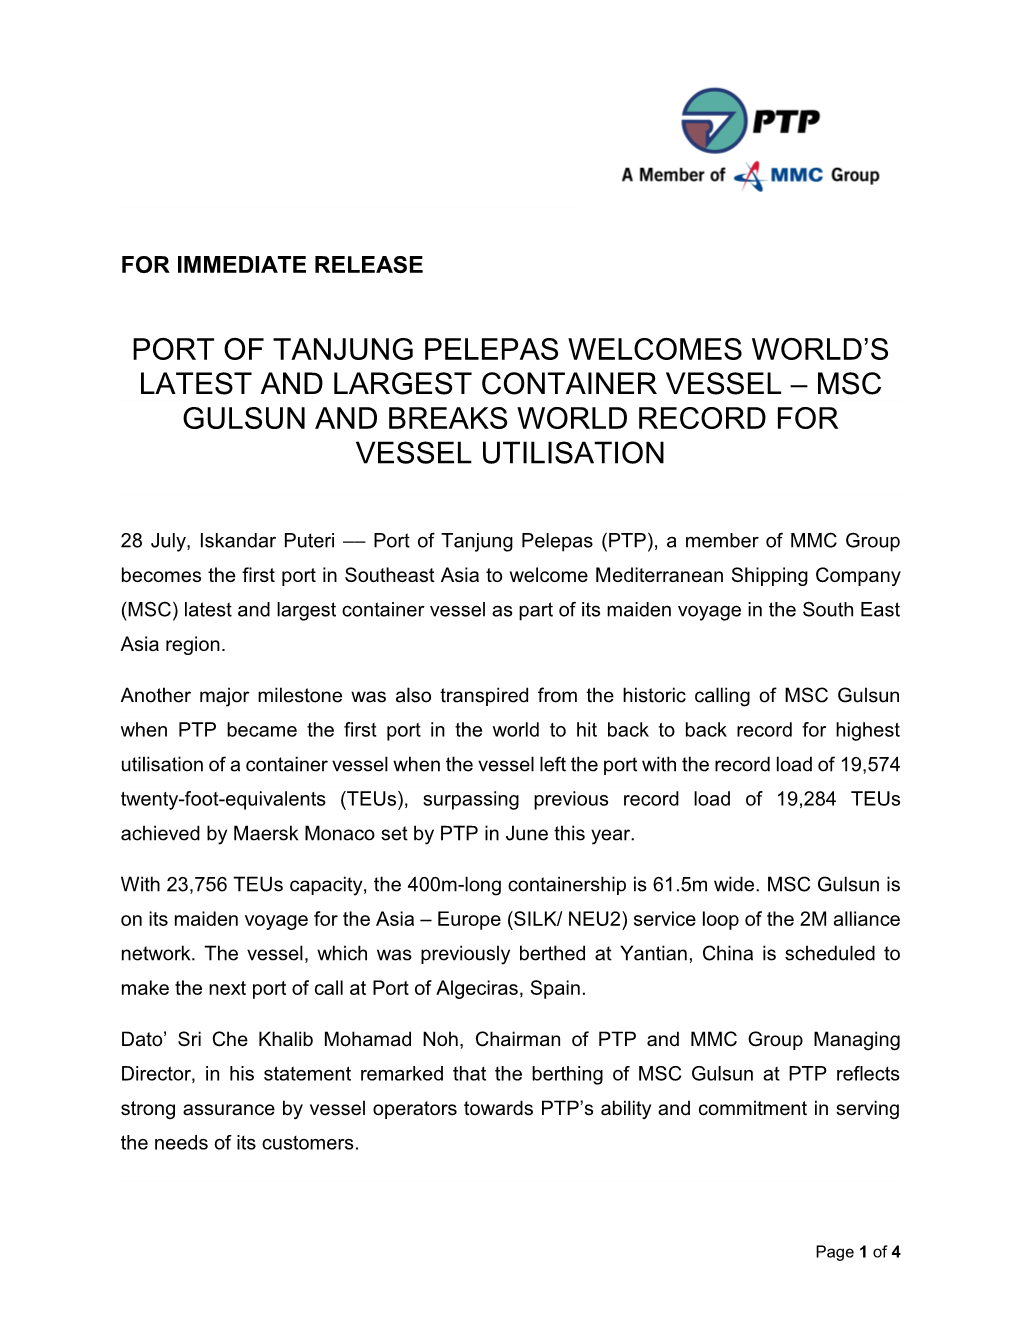 Msc Gulsun and Breaks World Record for Vessel Utilisation